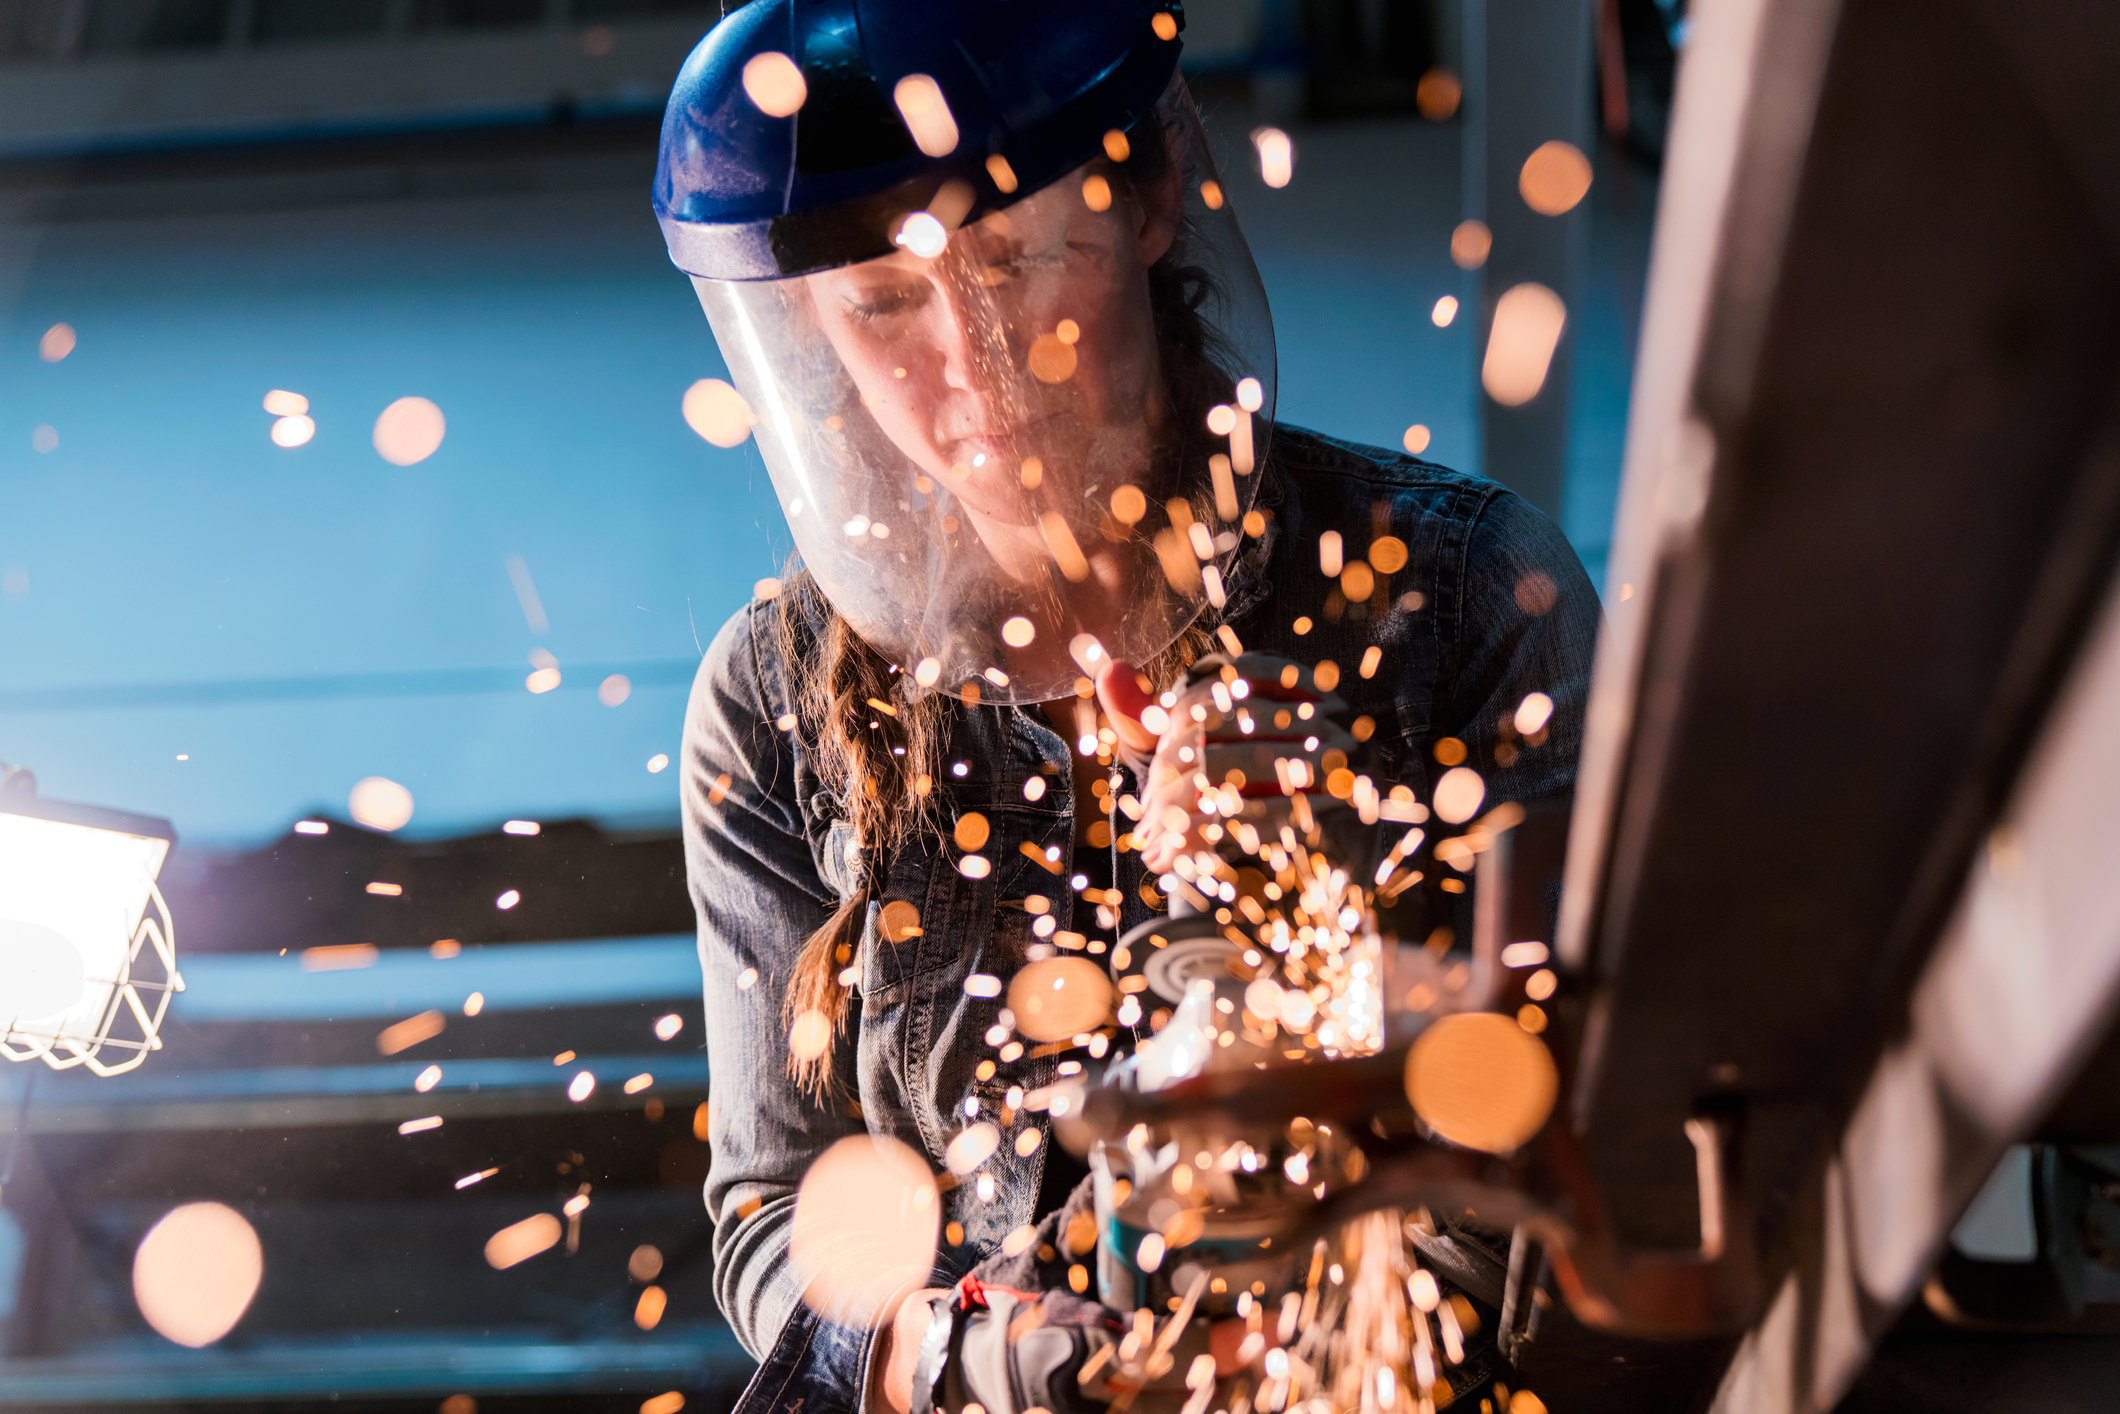 Careers in Construction: Opportunities in the Metalworking Industry